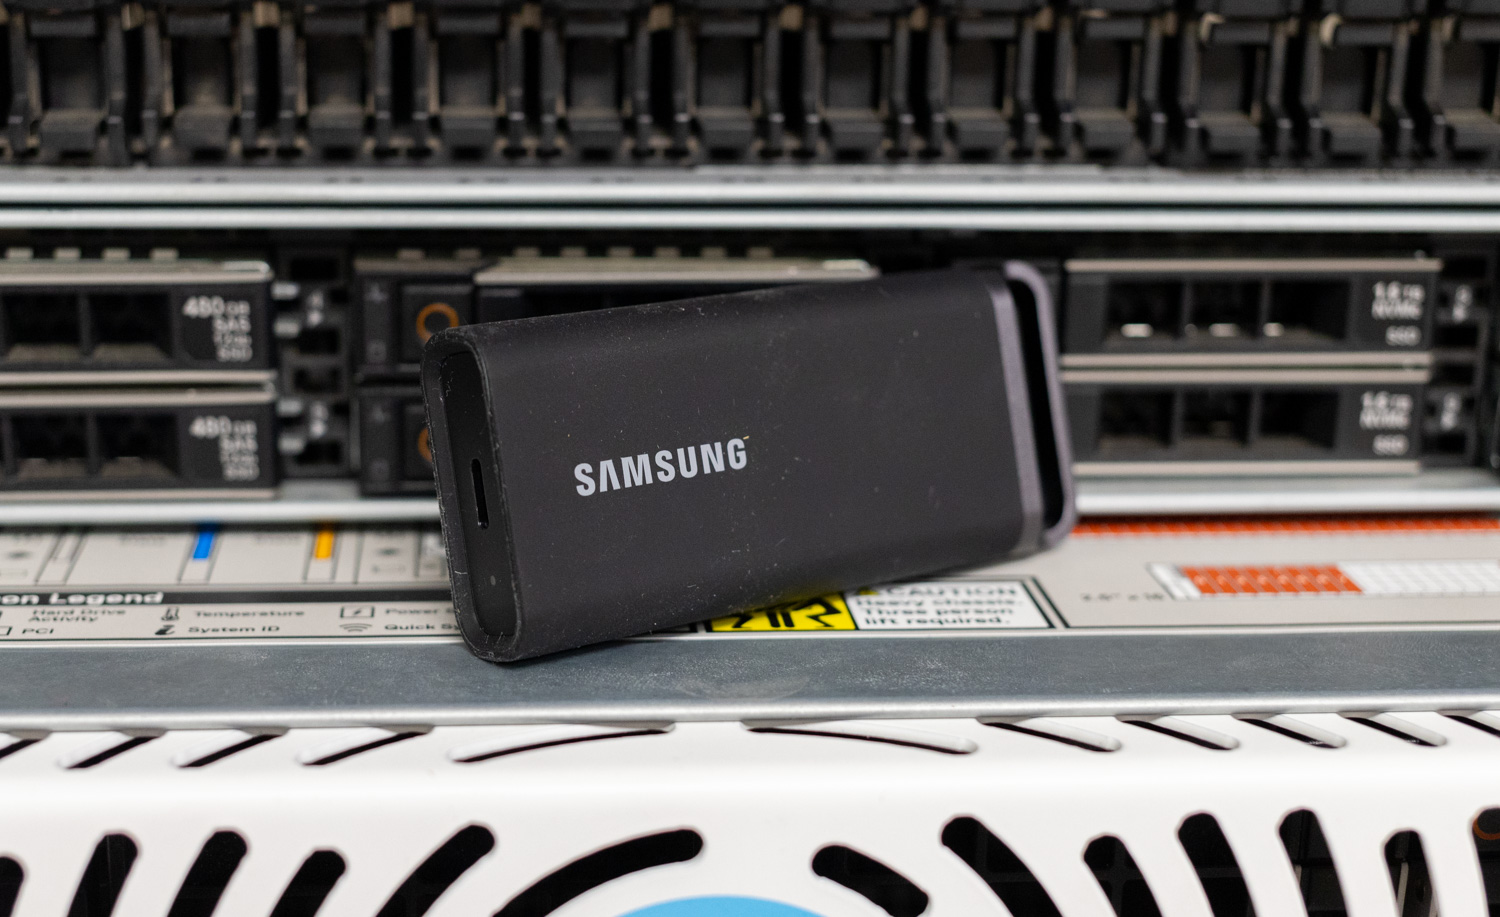 Samsung Portable SSD T5 EVO 8TB USB-C